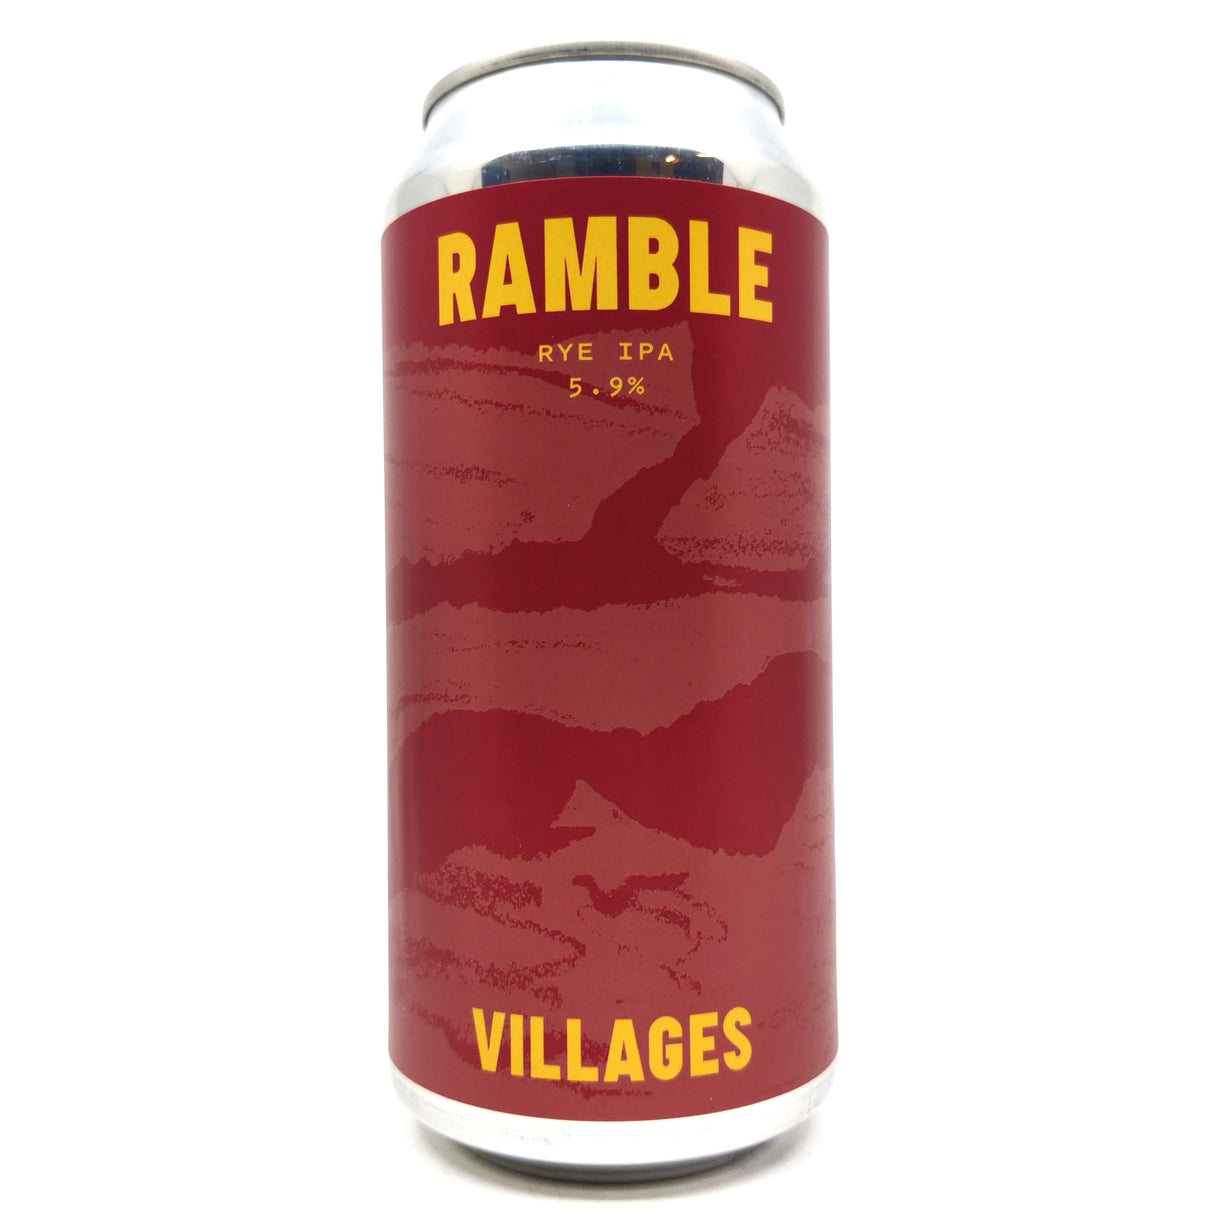 Villages Ramble Rye IPA 5.9% (440ml can)-Hop Burns & Black